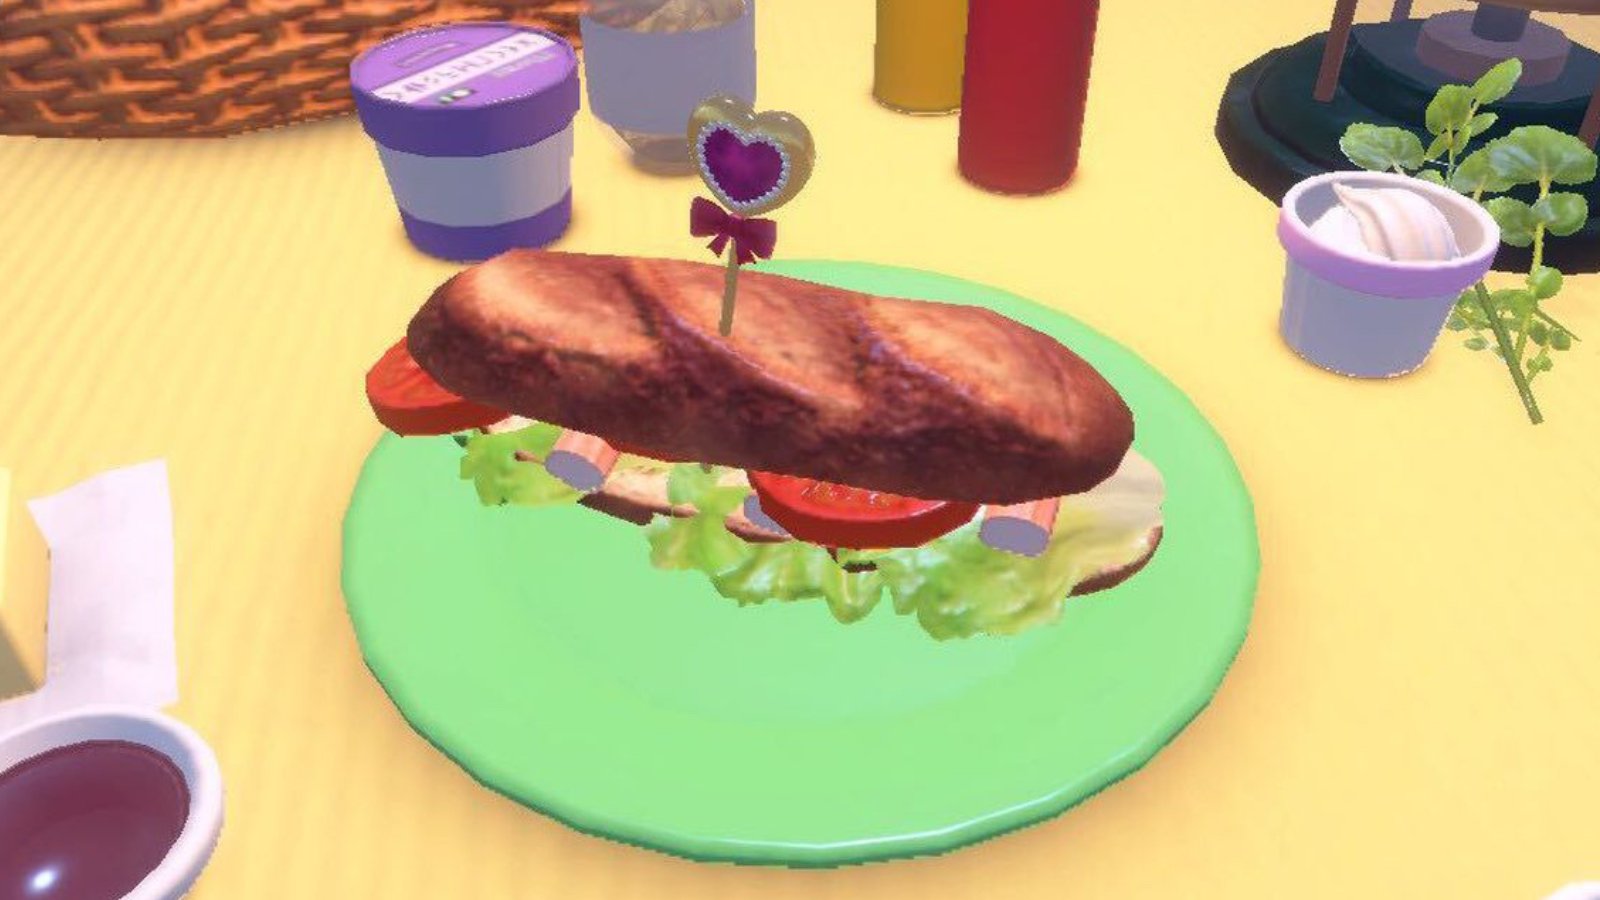 Pokemon Scarlet and Violet, Shiny/Sparkling Power Sandwich Recipes